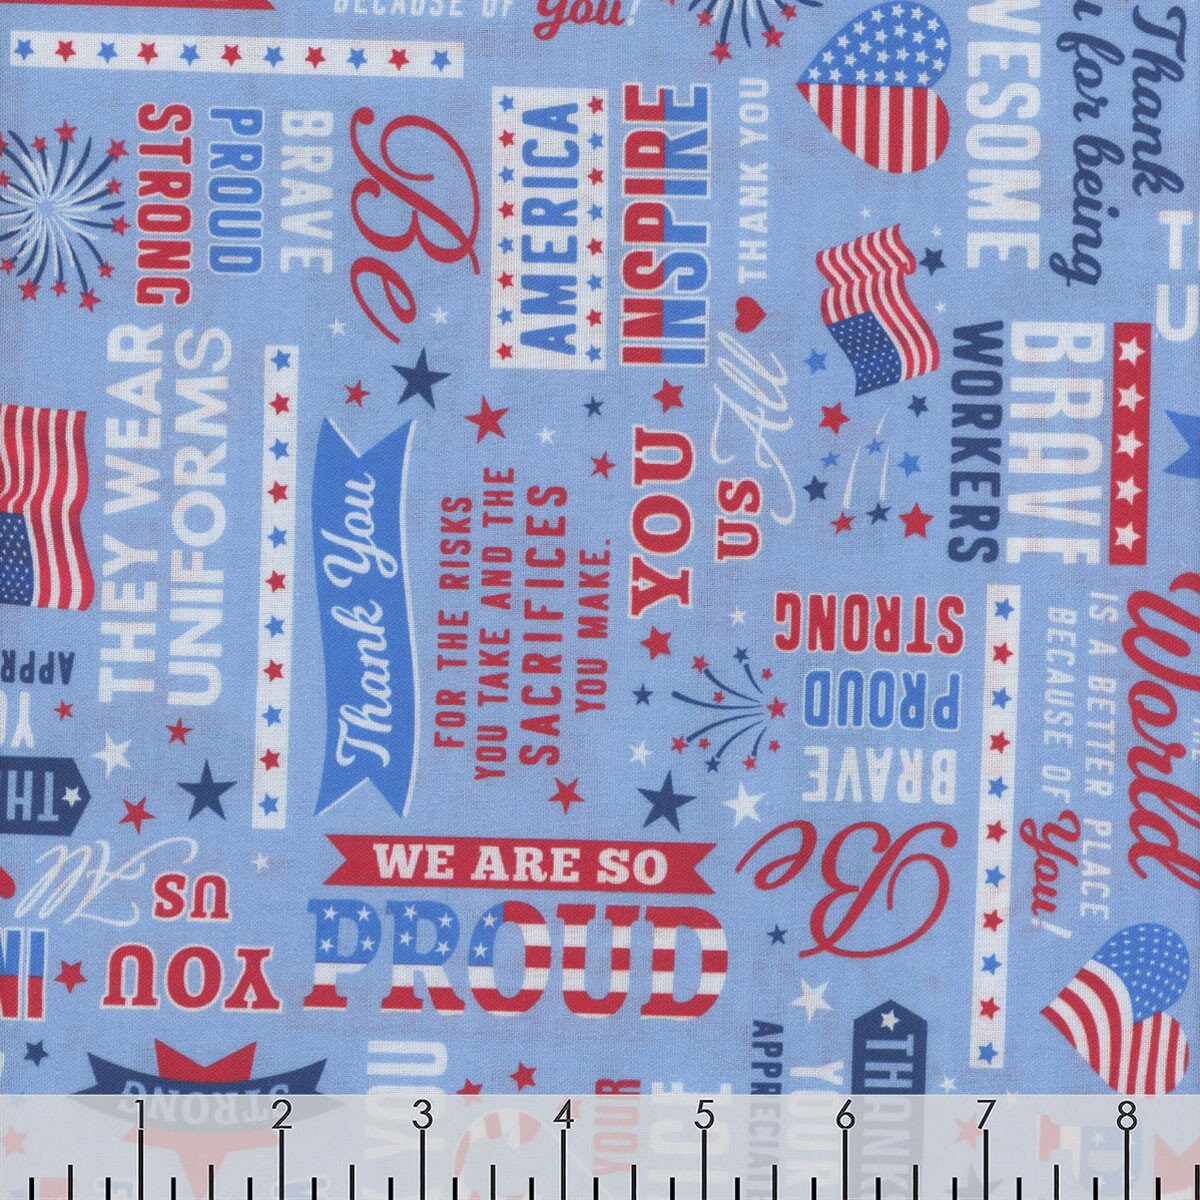 True Hero Medium Blue Patriotic Words Fabric - Kanvas by Benarex 14148B-54, Blue Patriotic Words Fabric By the Yard